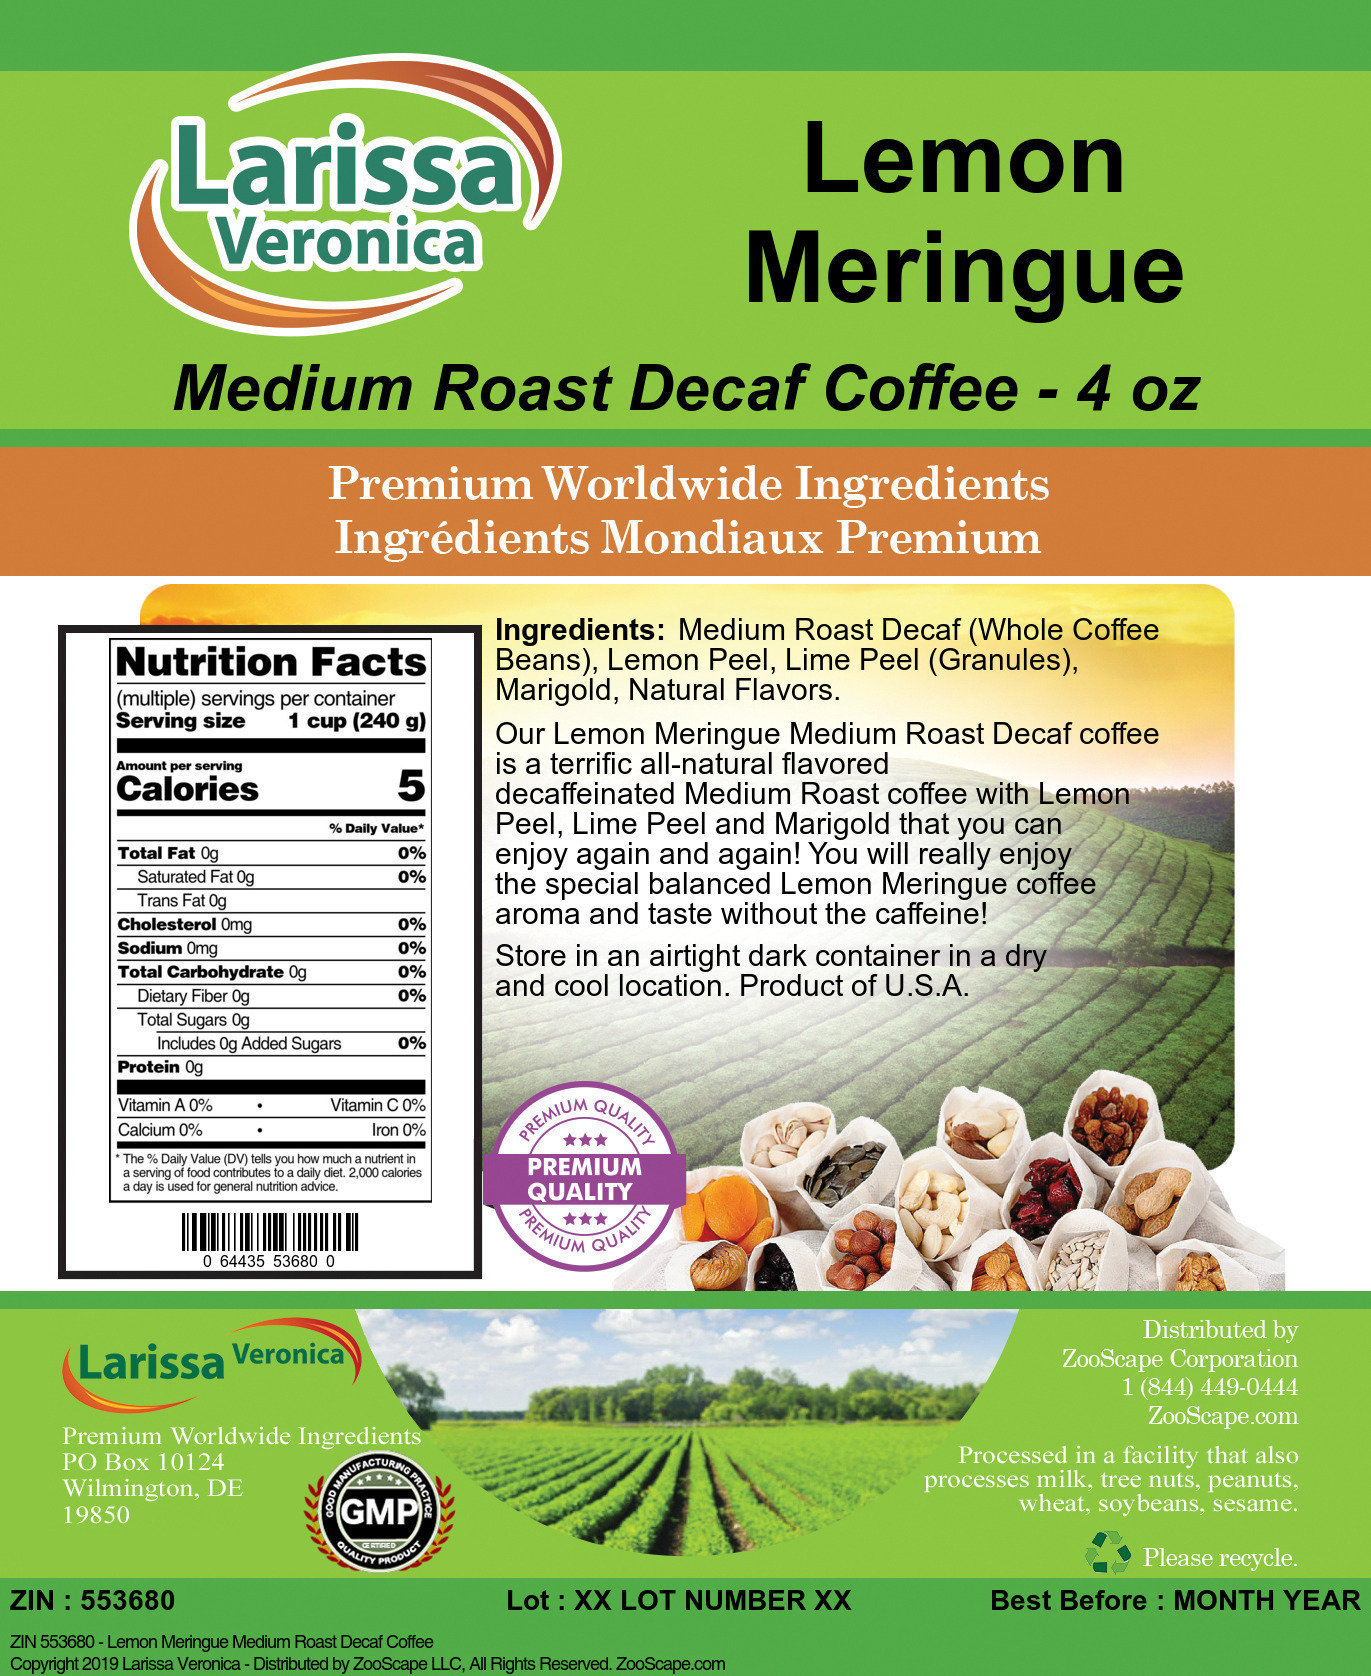 Lemon Meringue Medium Roast Decaf Coffee - Label